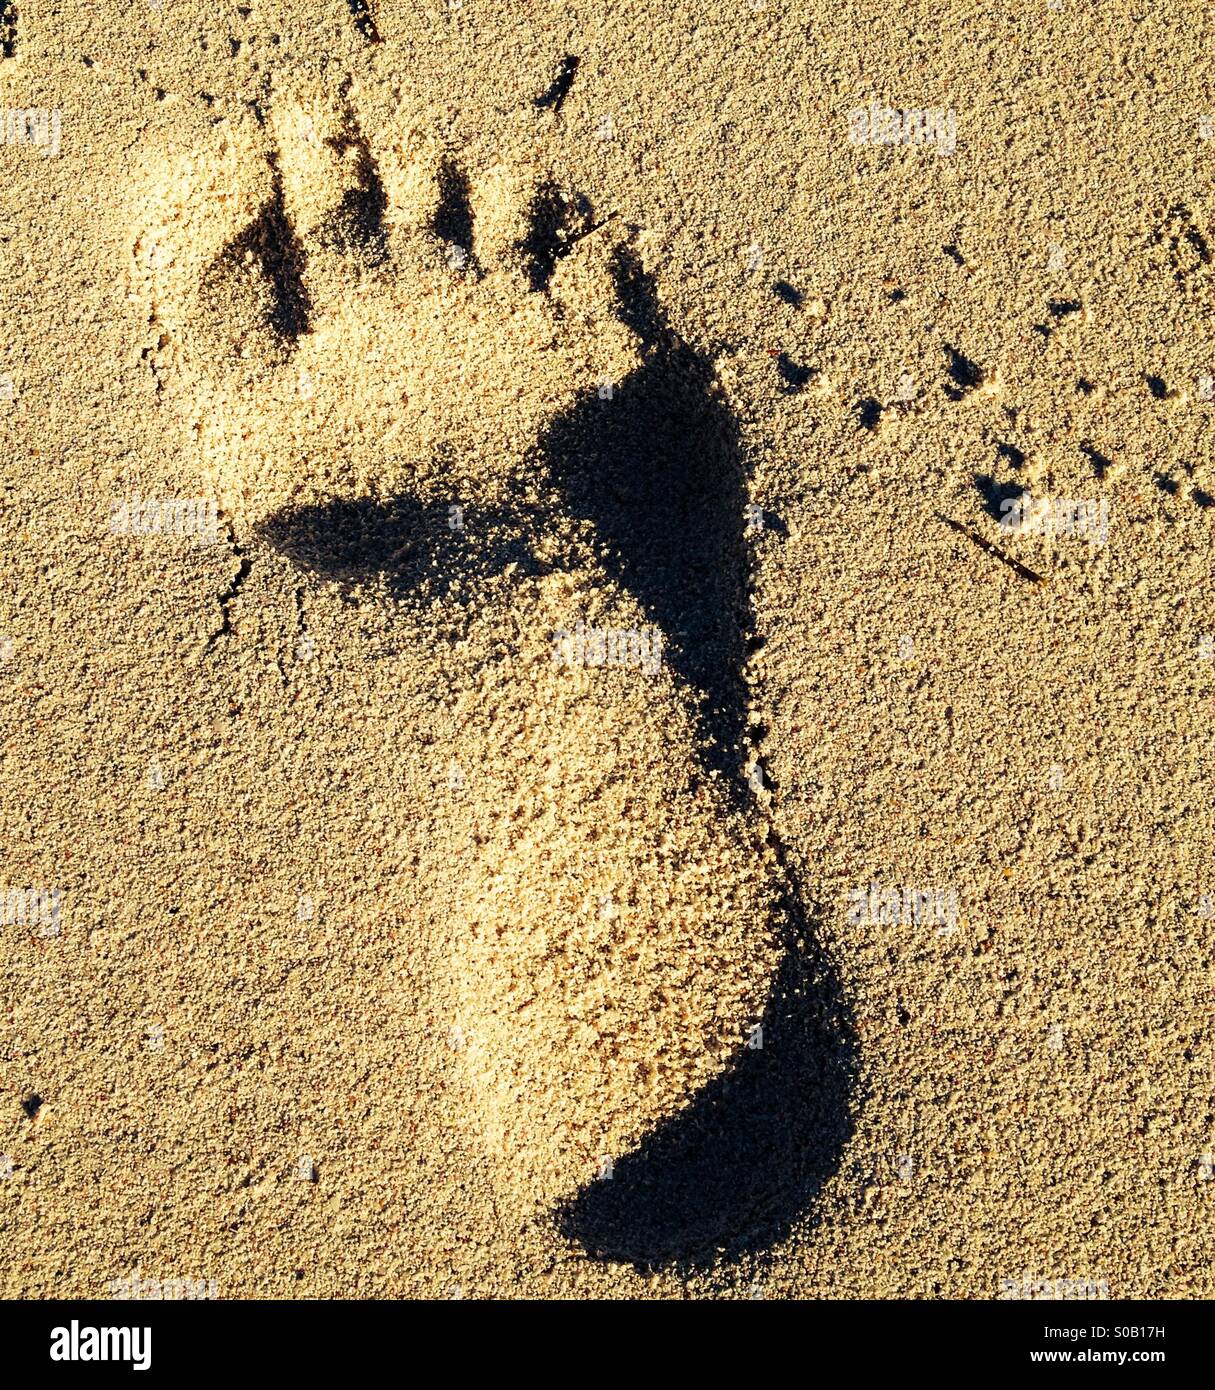 Feet in sand Stock Photo - Alamy